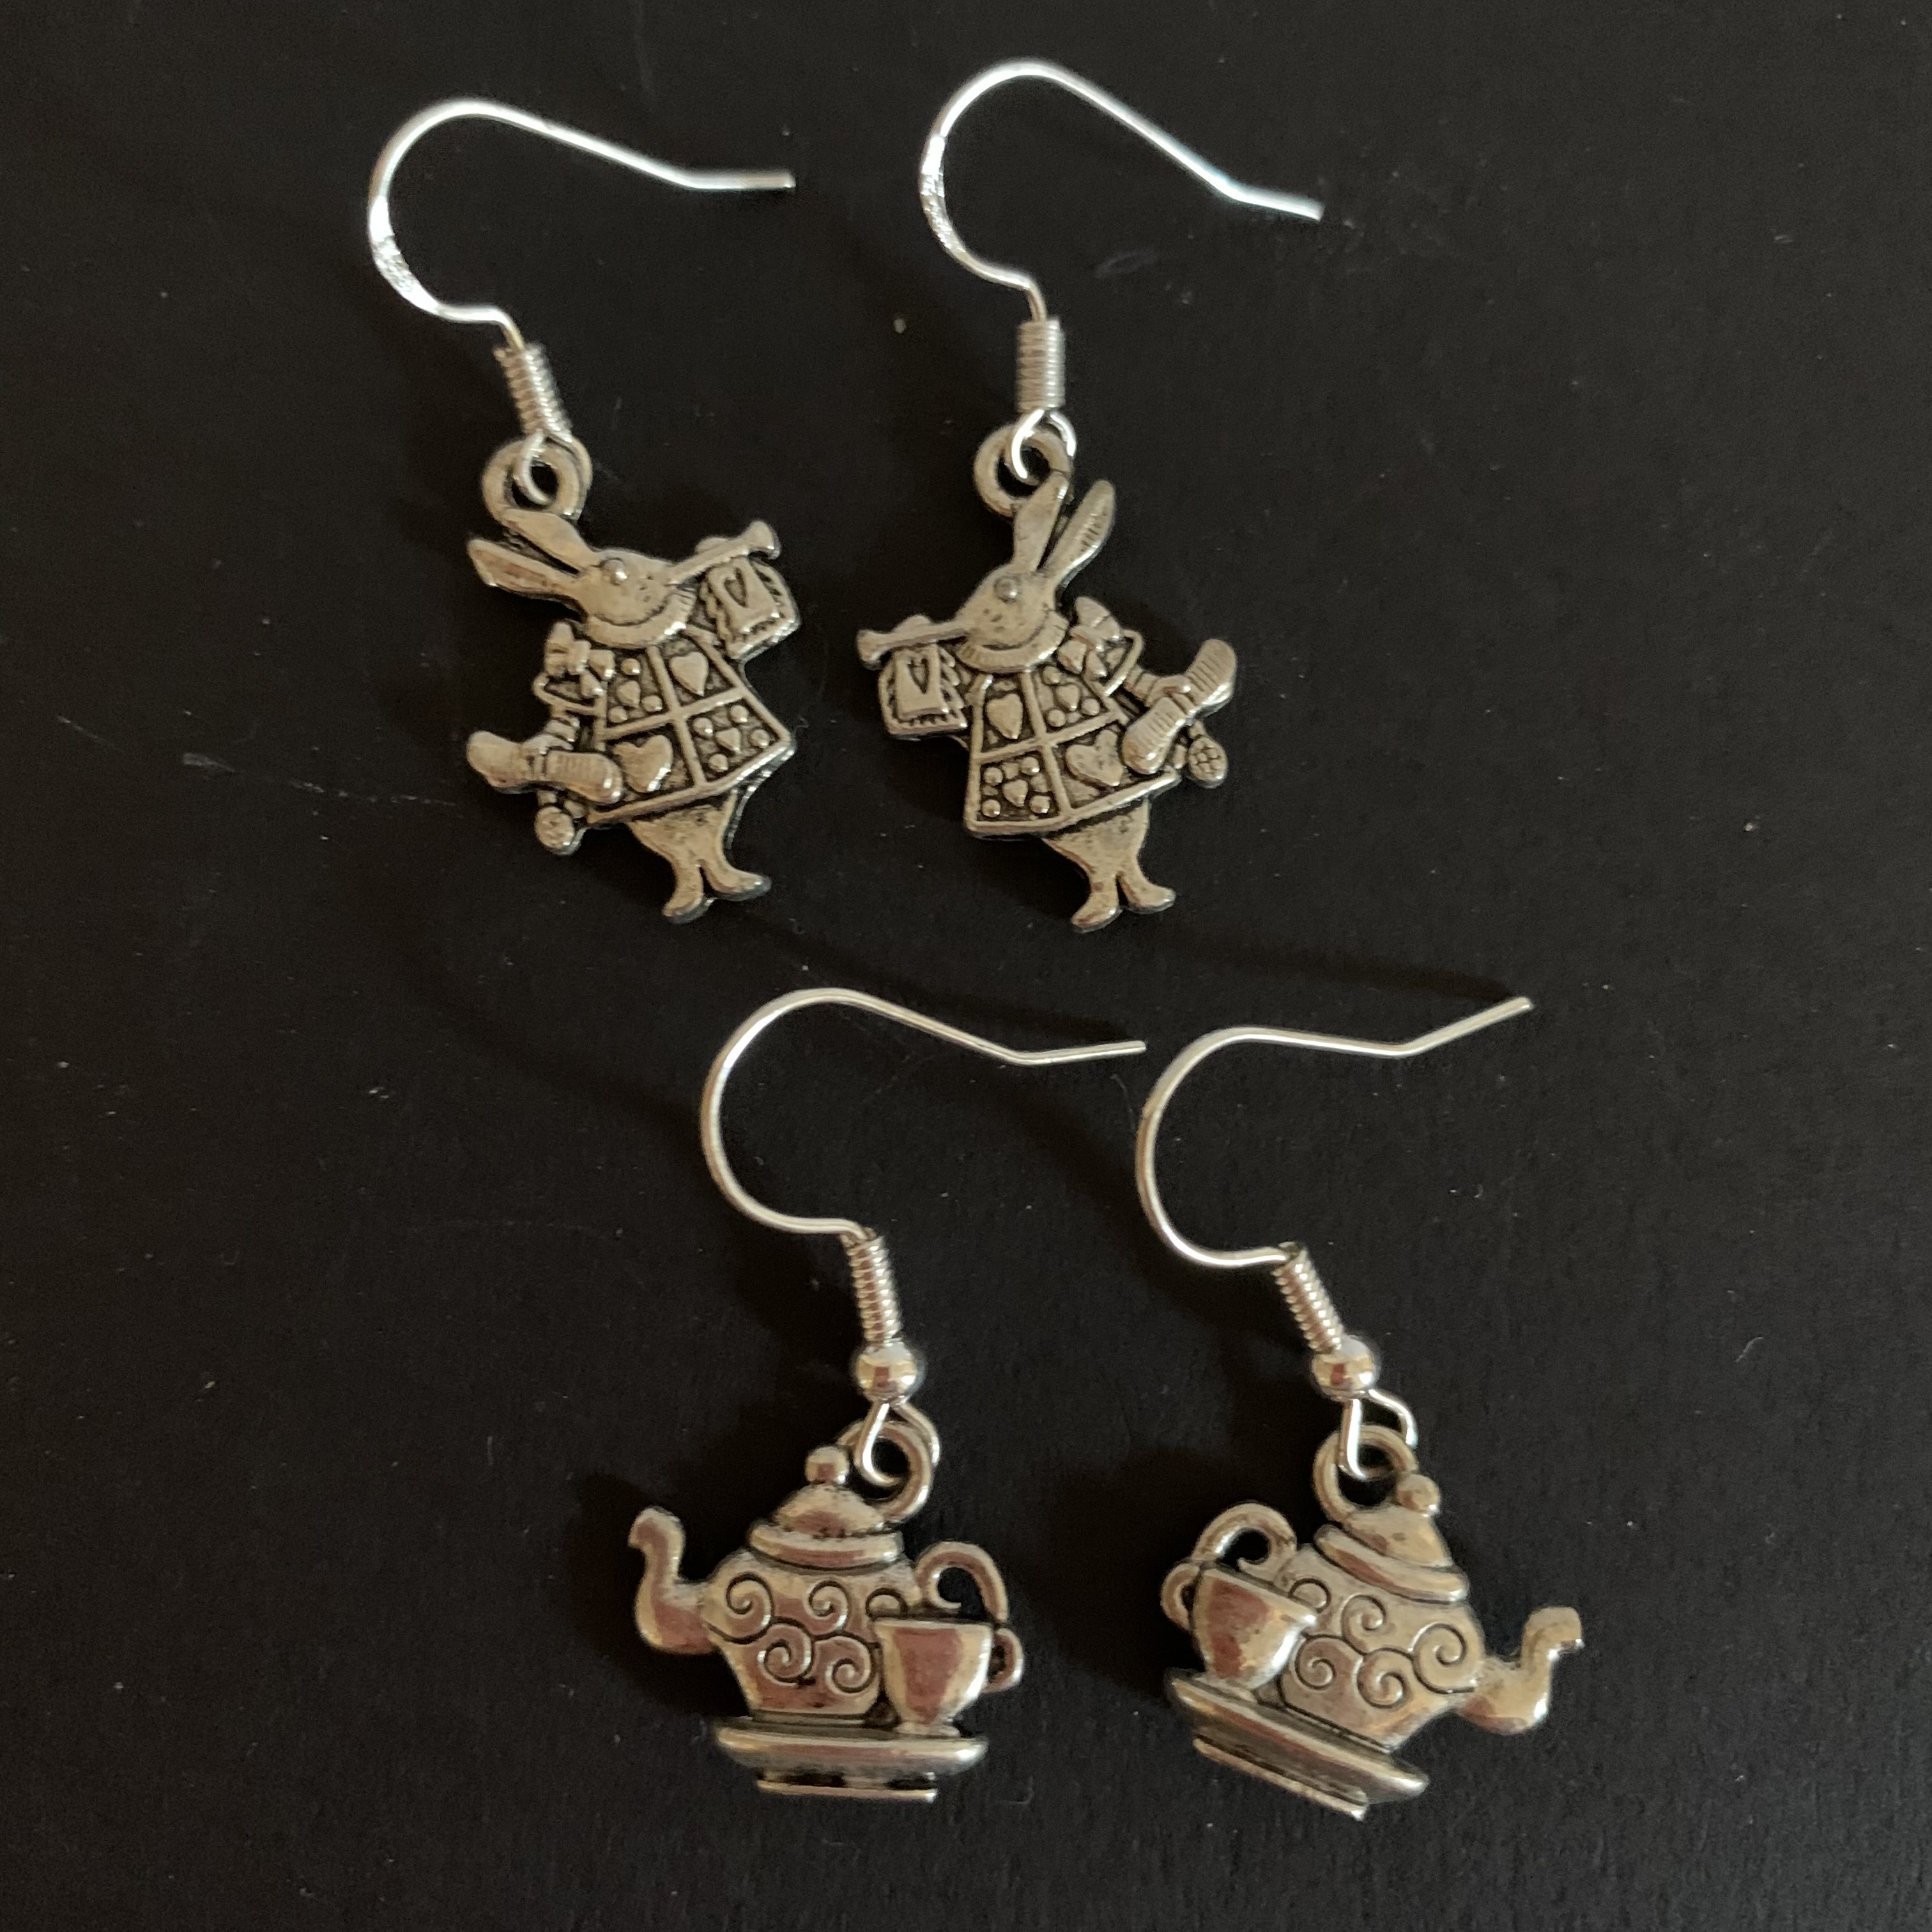 Jewellery White Rabbit and Teapot Earrings £3 each